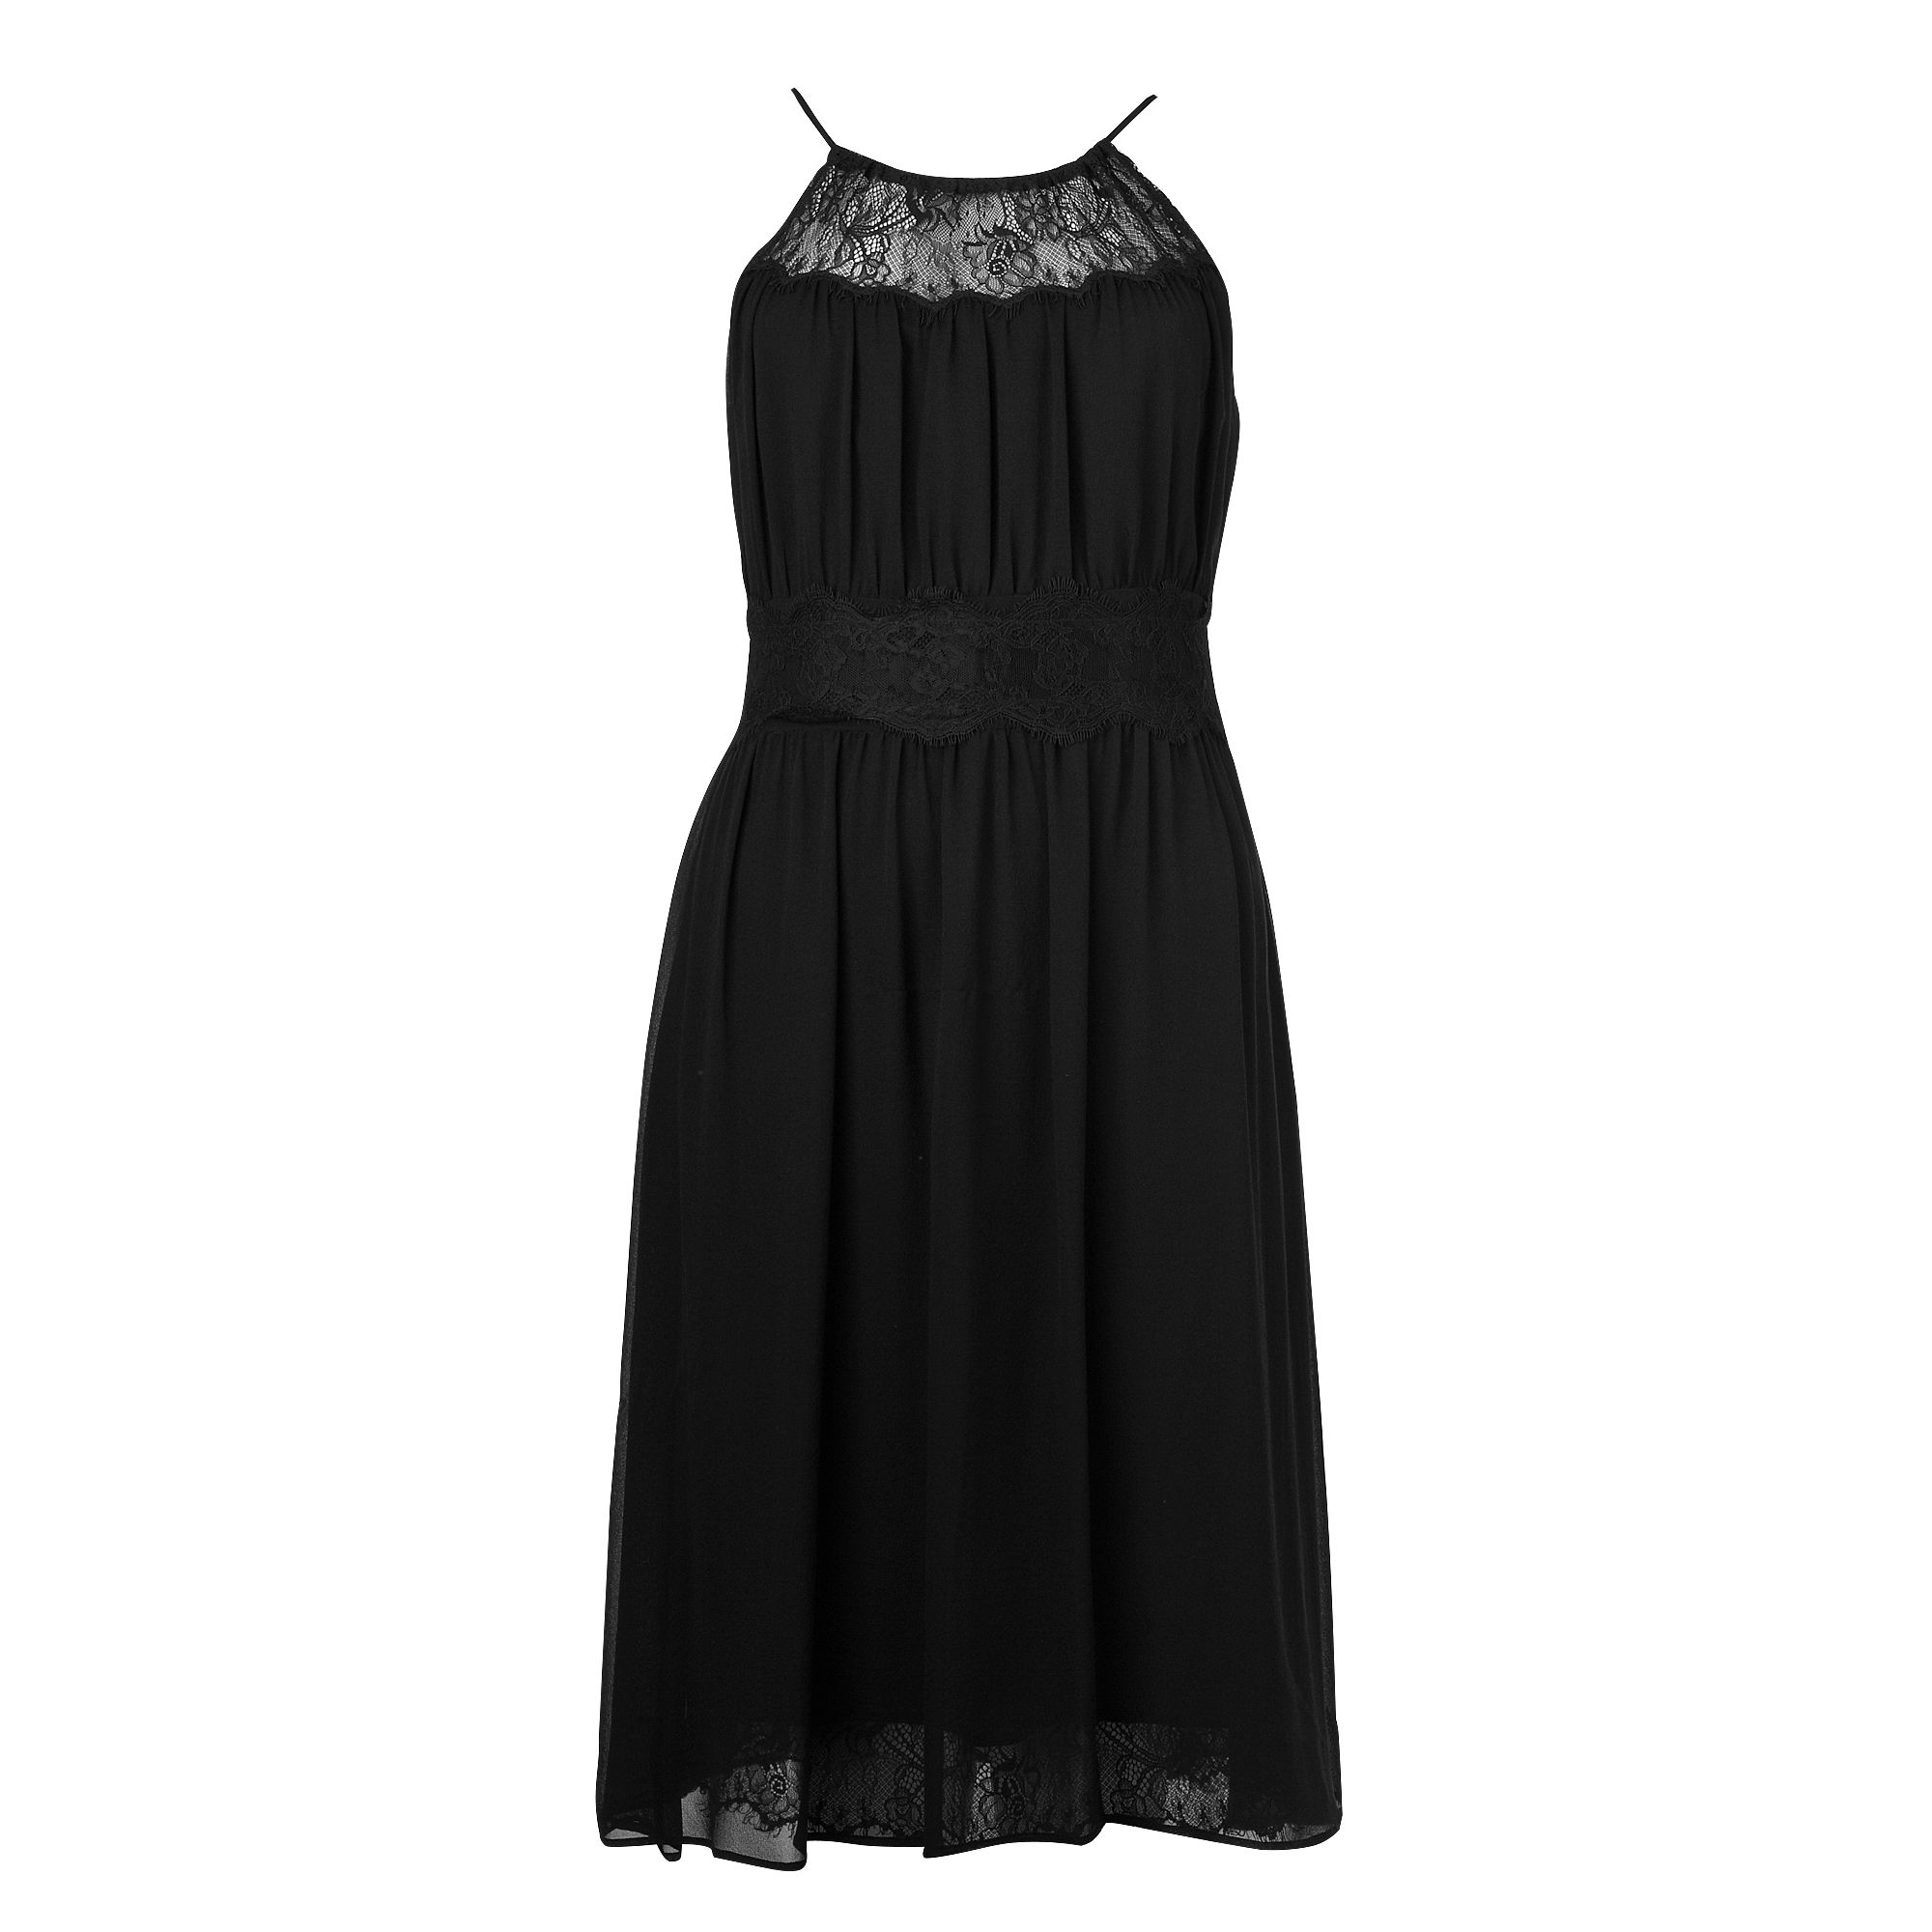 Lk Bennett Alina Dress in Black | Lyst